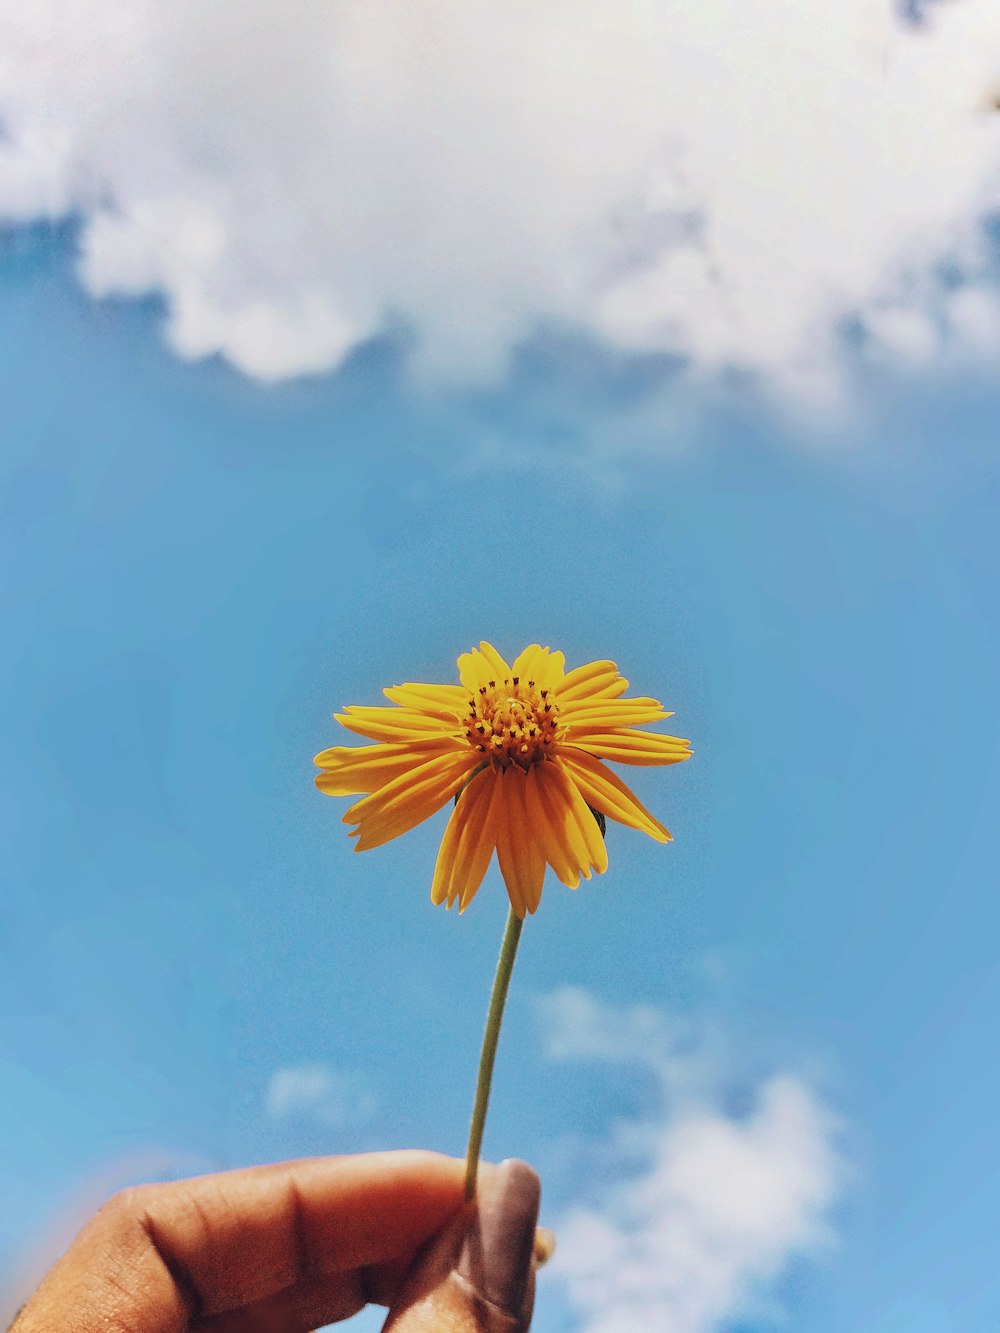 yellow flower under blue sky